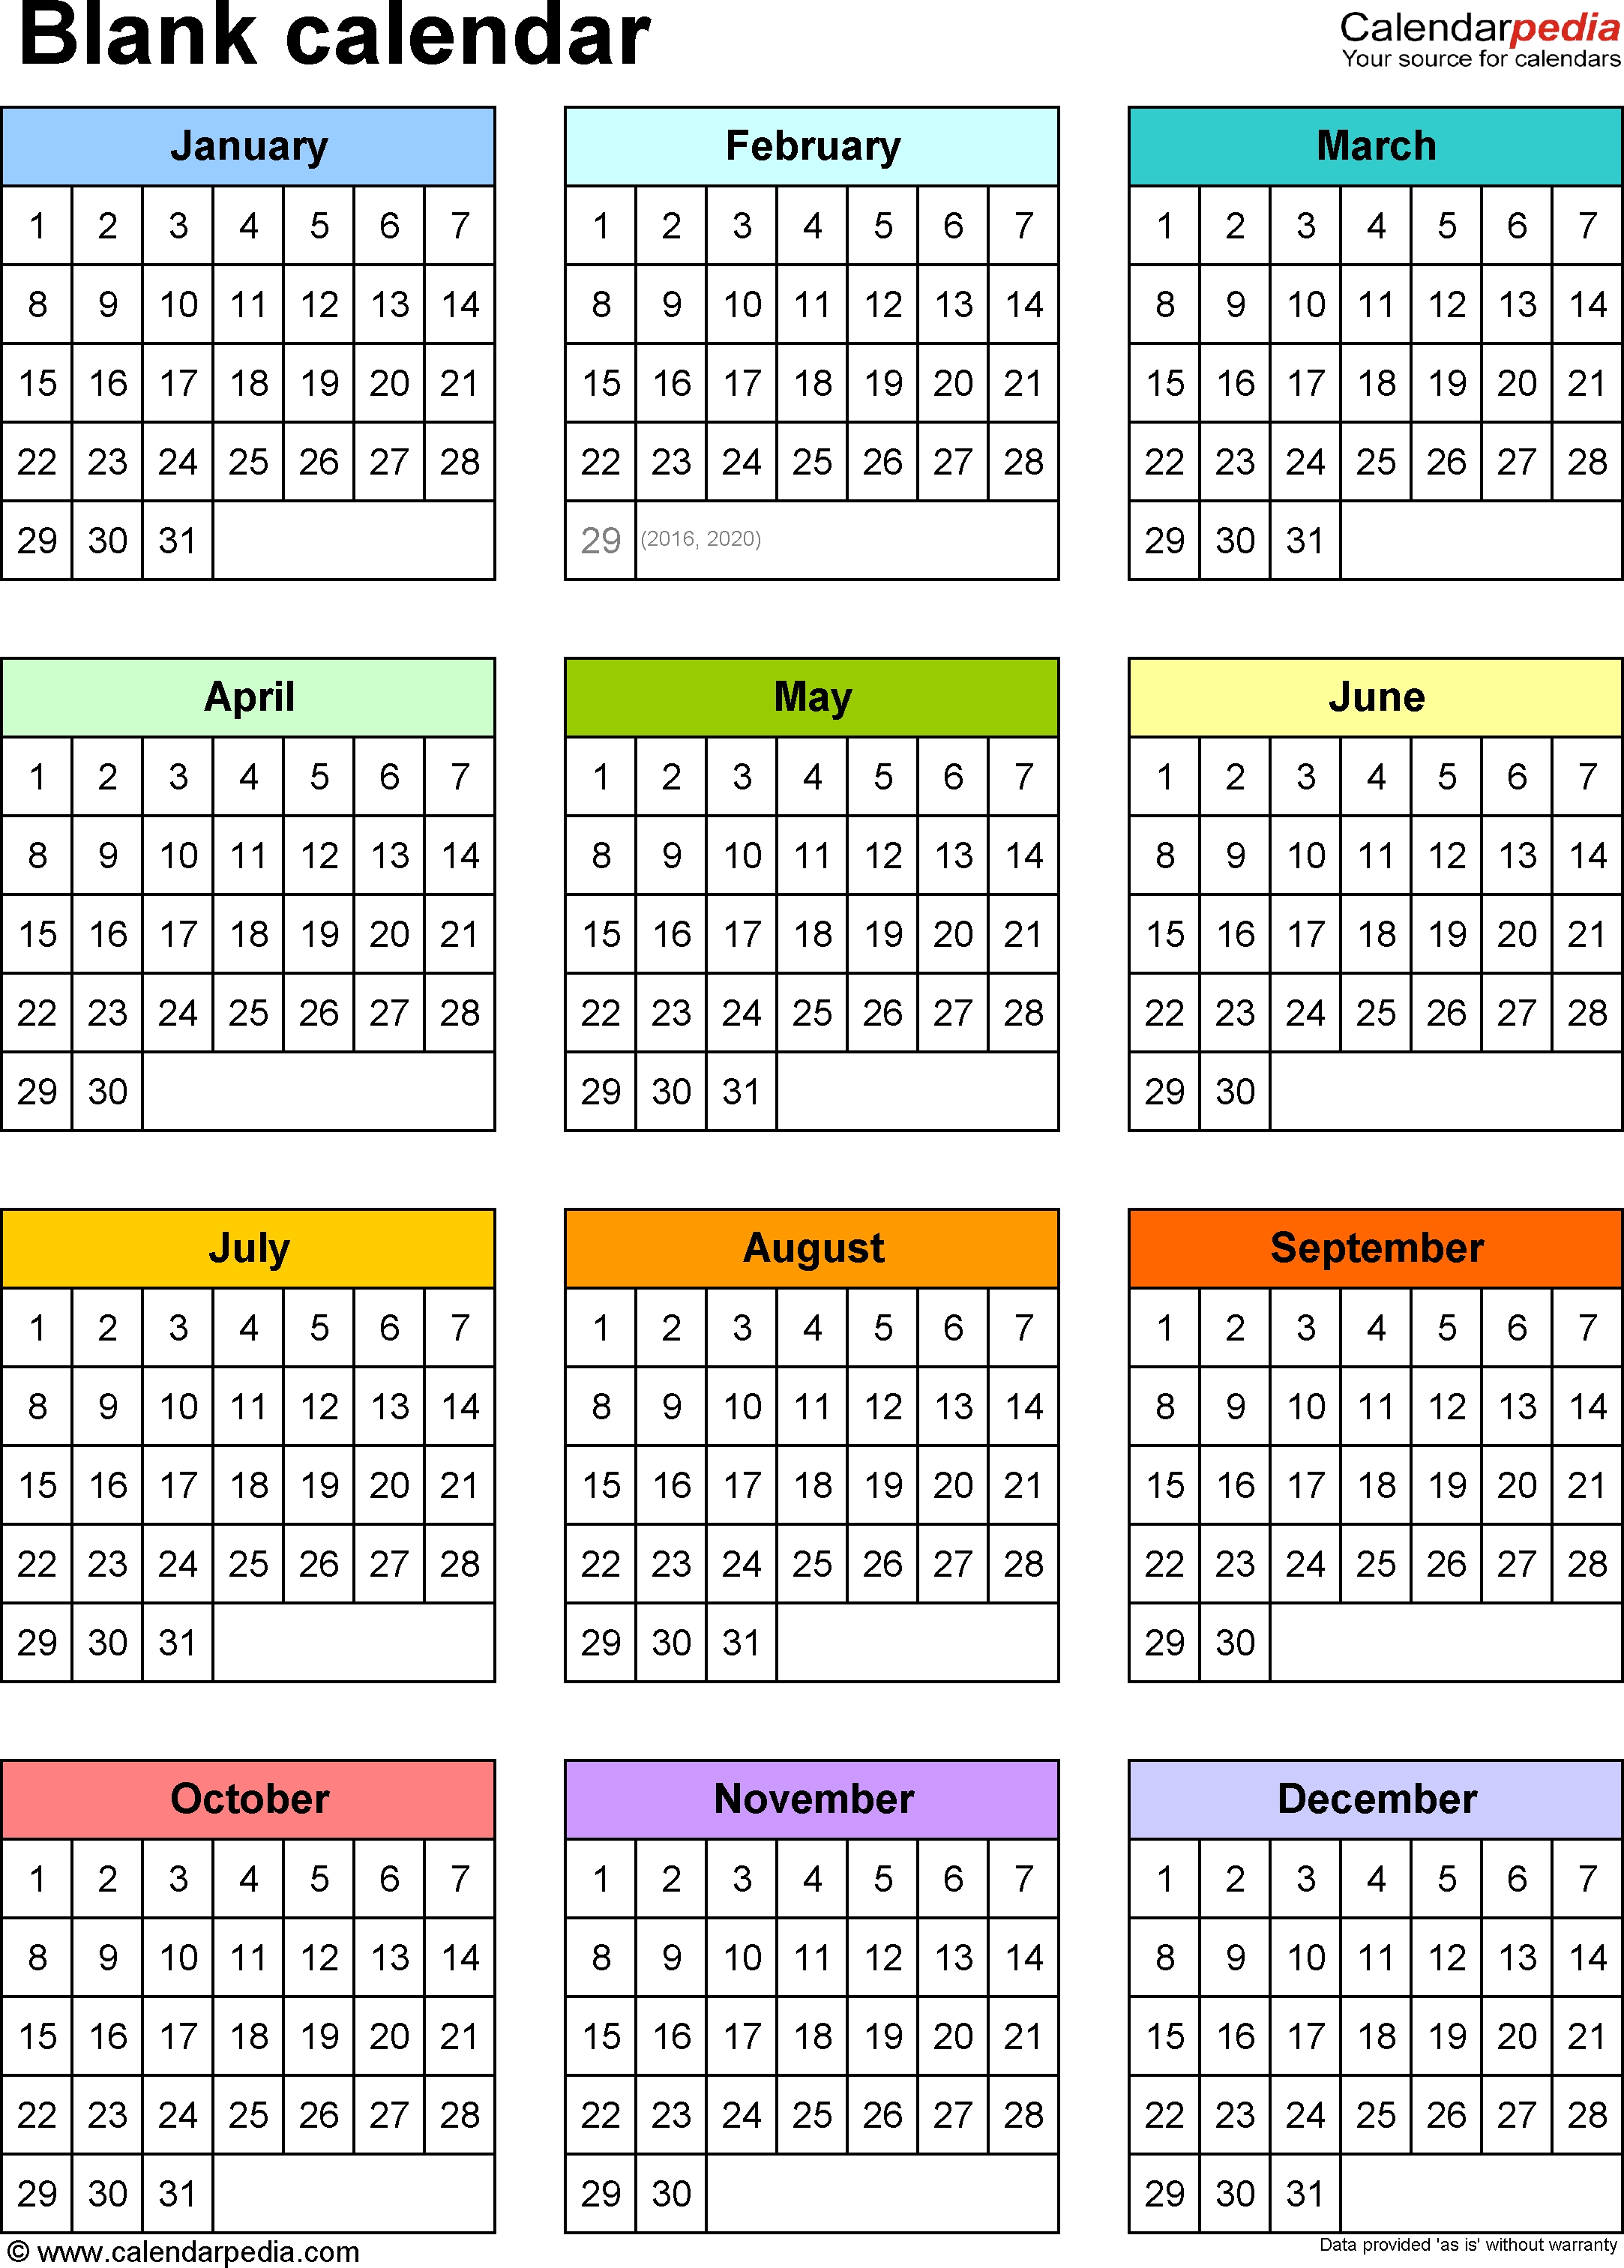 Blank Calendar - 9 Free Printable Microsoft Word Templates Blank Calendar Month View